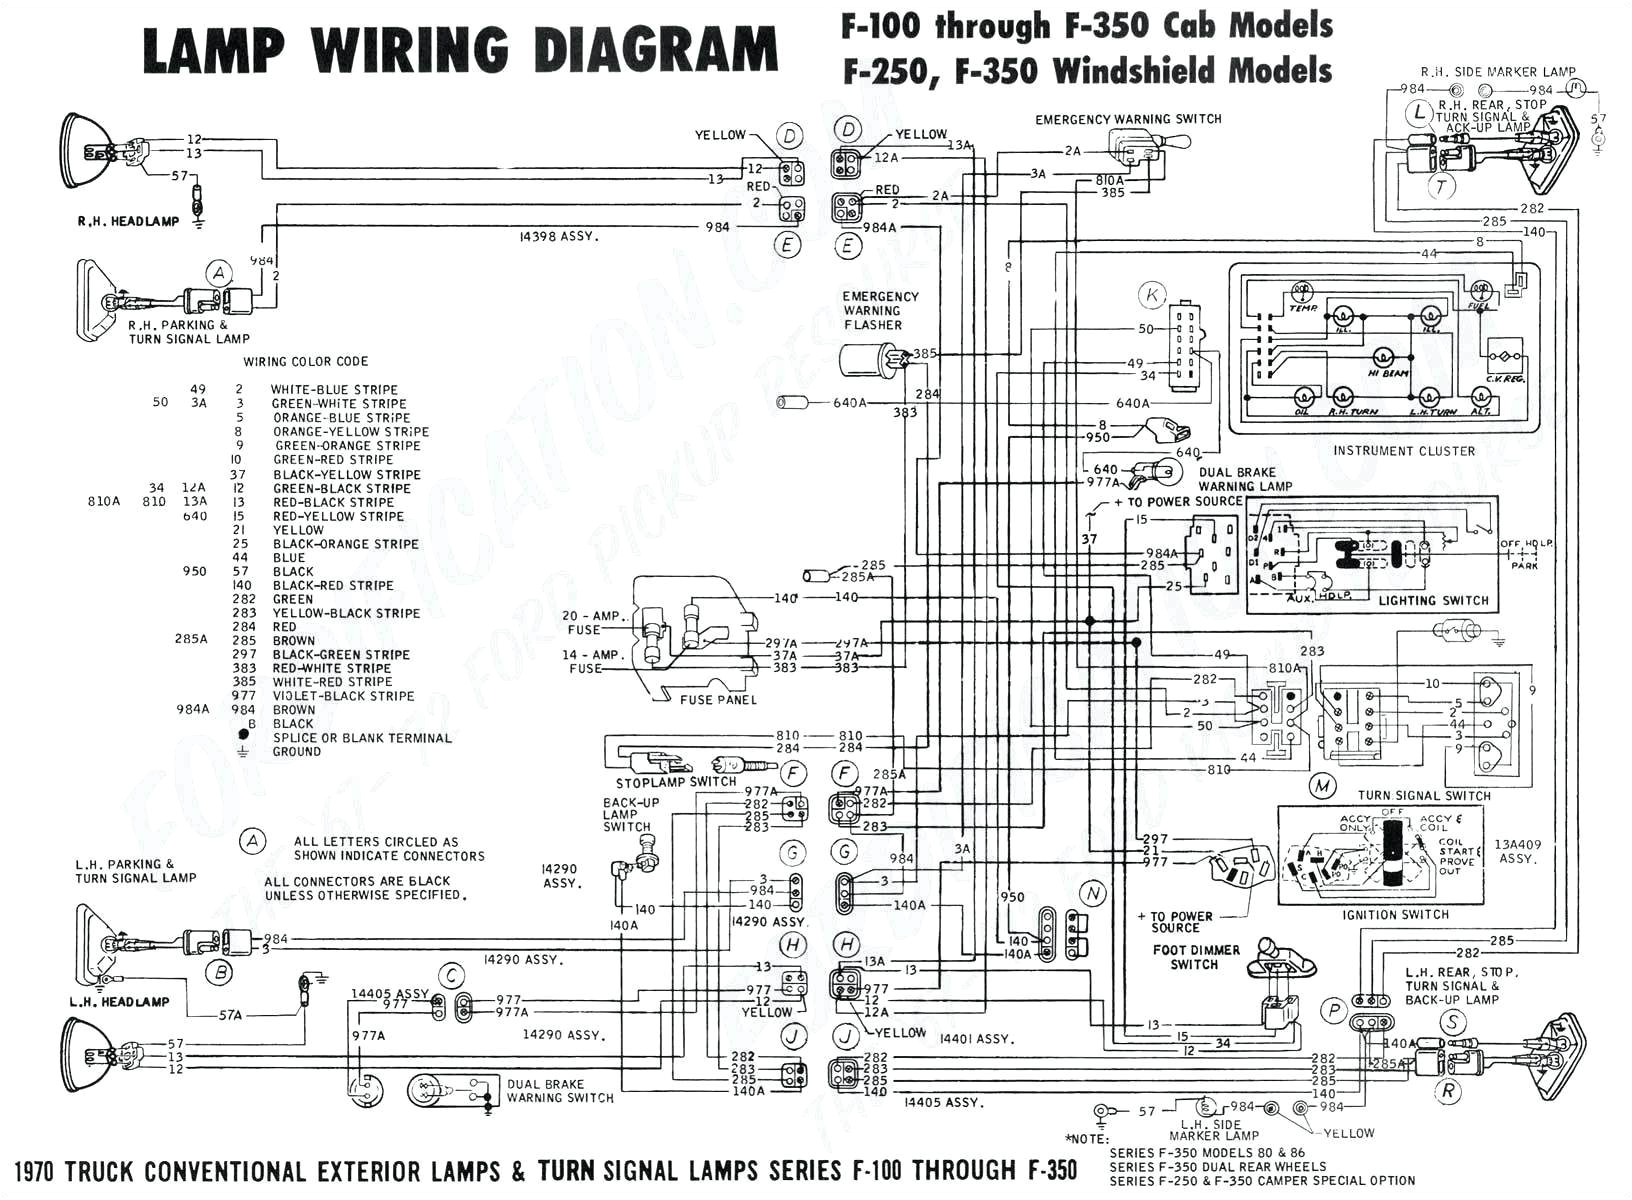 2002 chevy silverado tail light wiring diagram wiring diagram database chevy silverado tail light wiring diagram